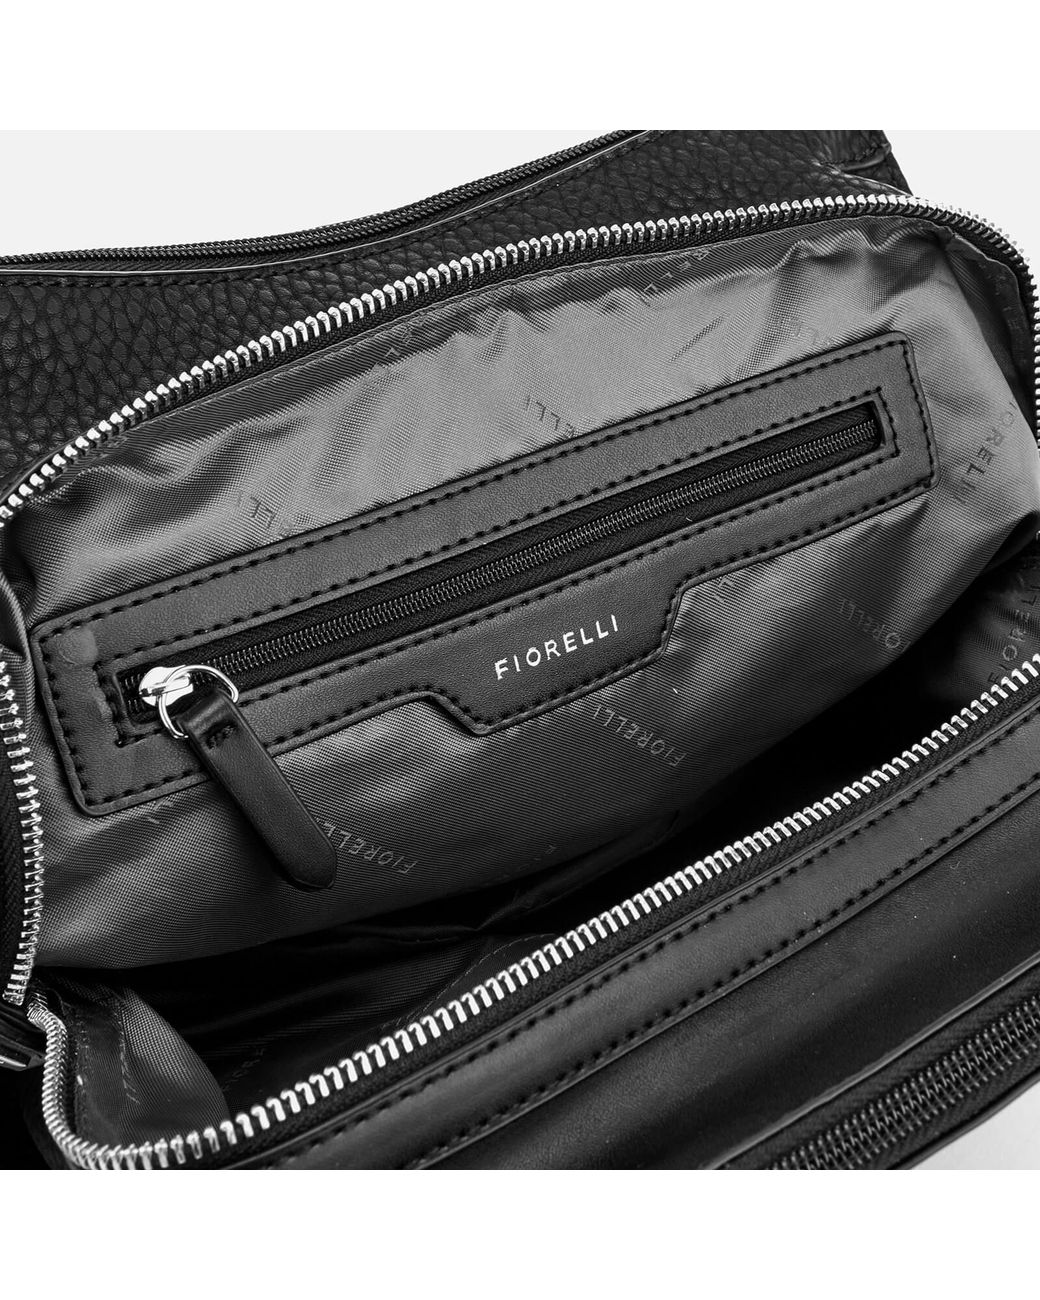 Fiorelli Mia Grab Bag in Black | Lyst Australia